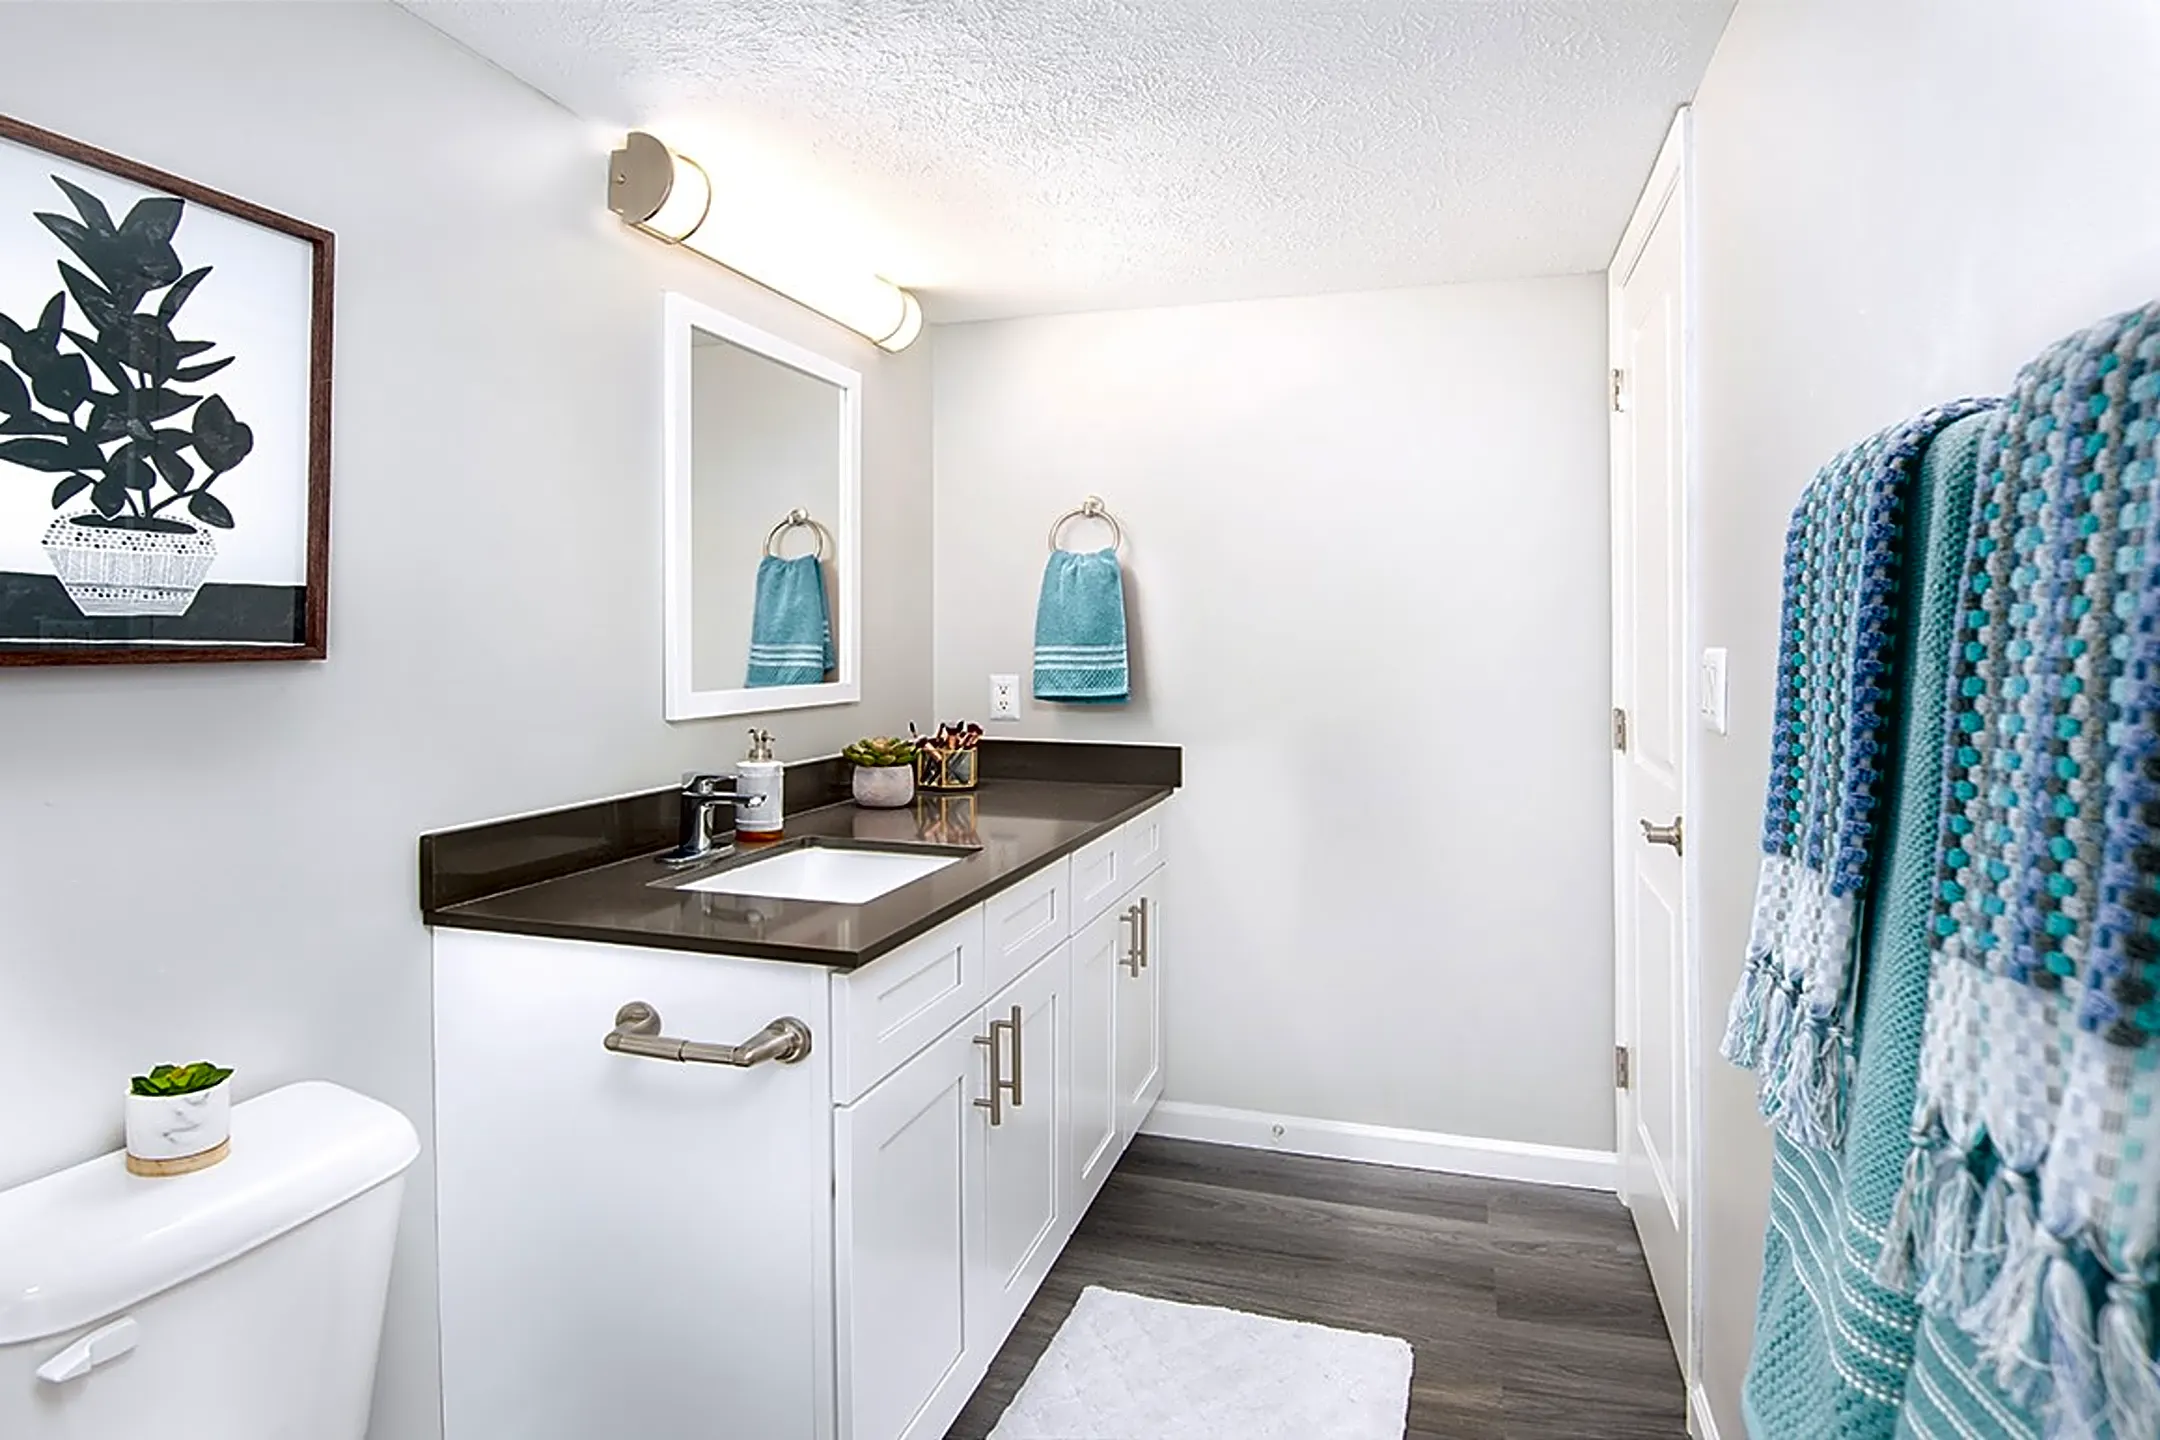 Bathroom - Riverbend Apartments - Indianapolis, IN